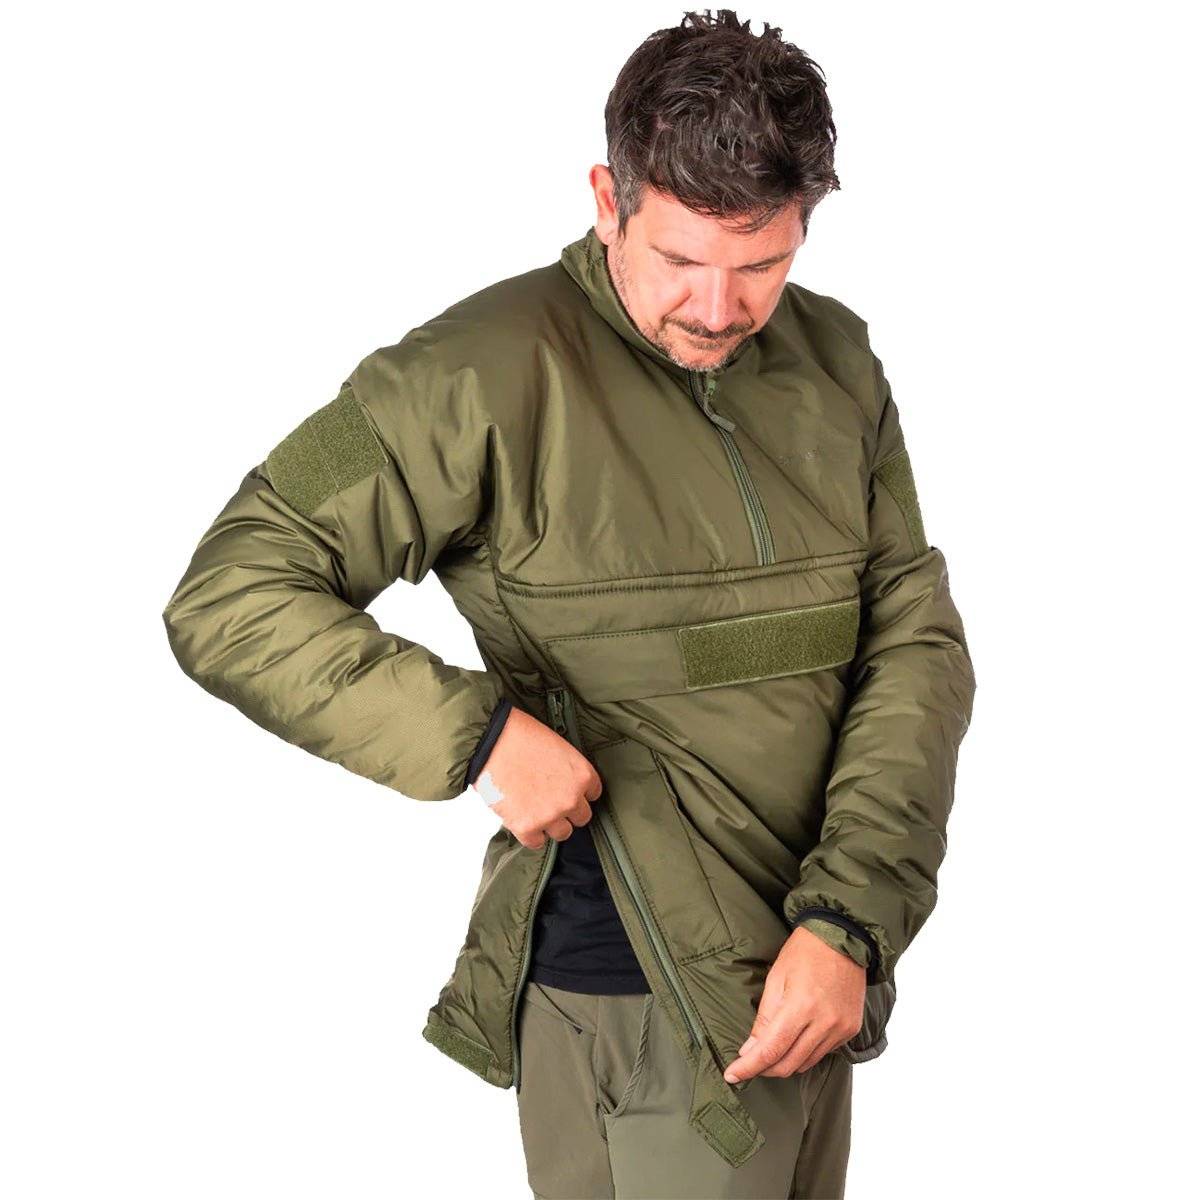 Snugpak Tactical Softie Smock Olive - John Bull Clothing